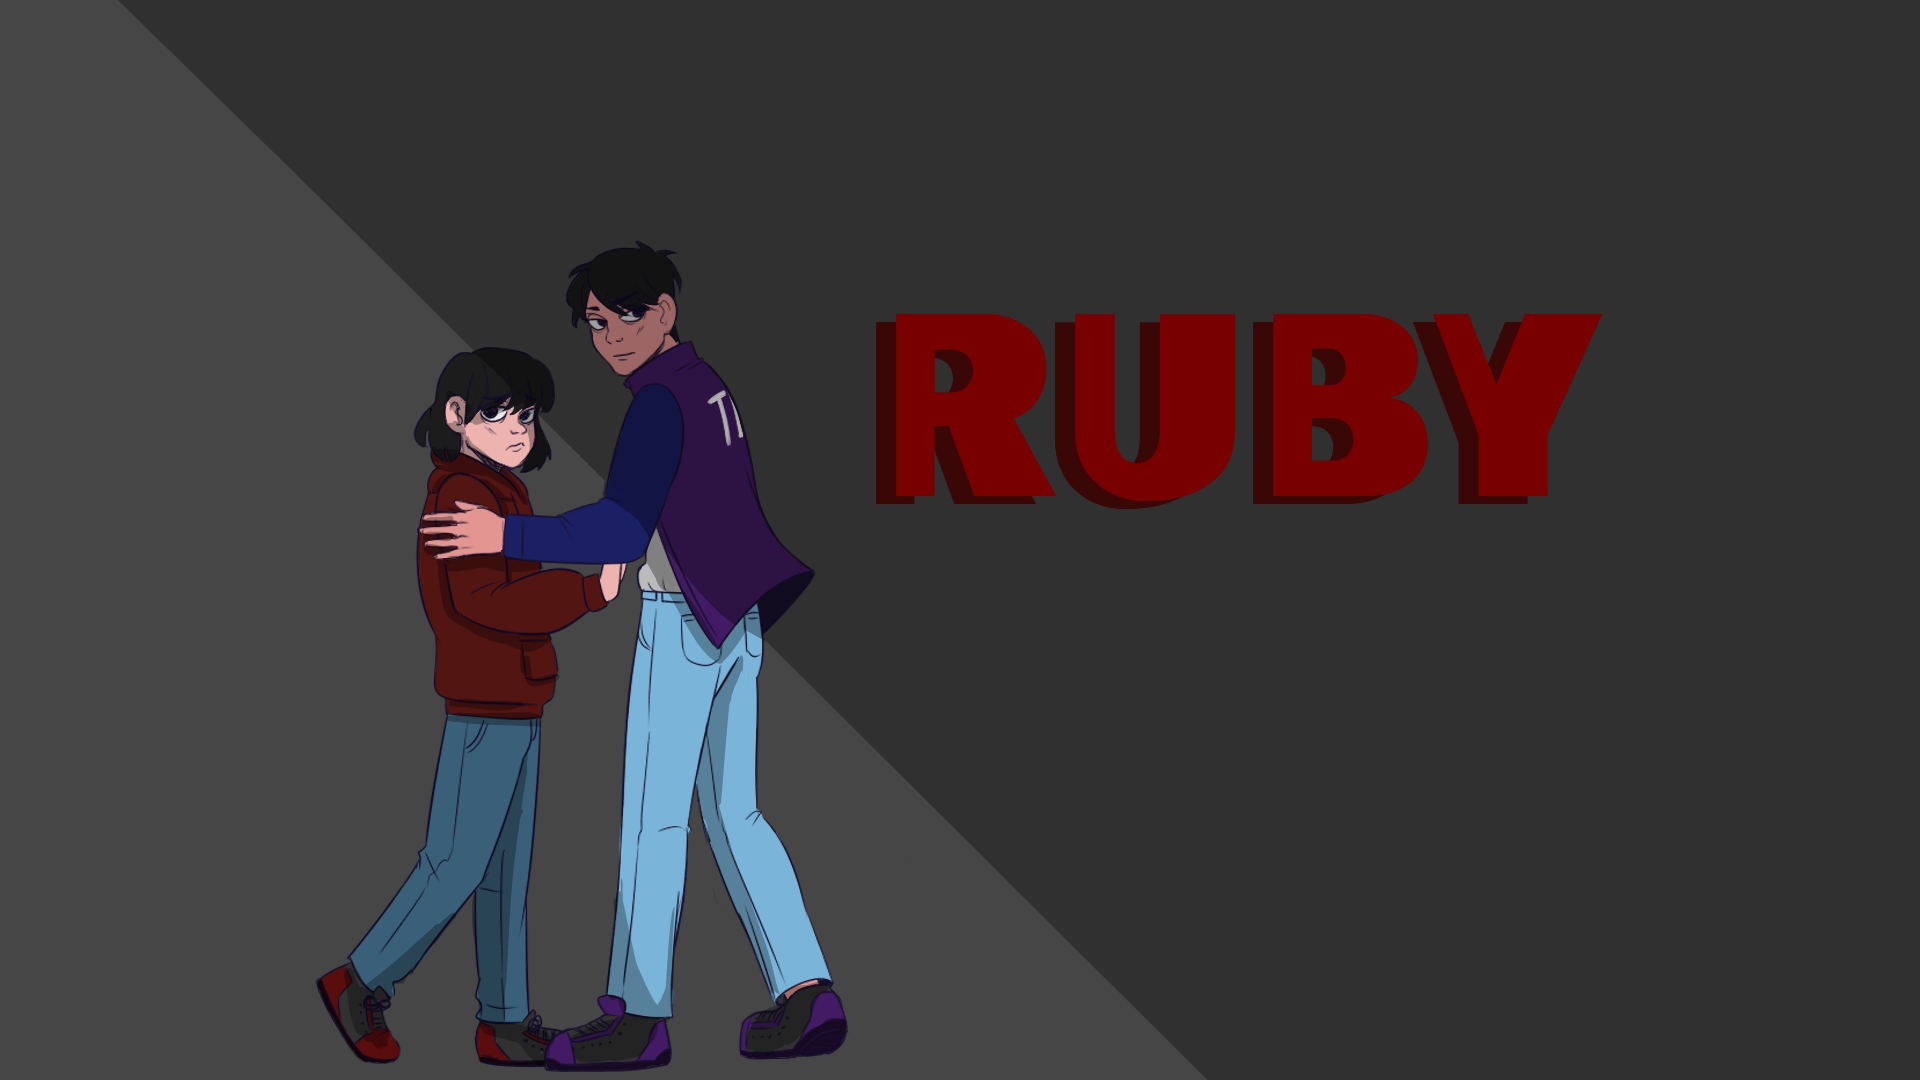 Husky Game Development Team Project: Ruby